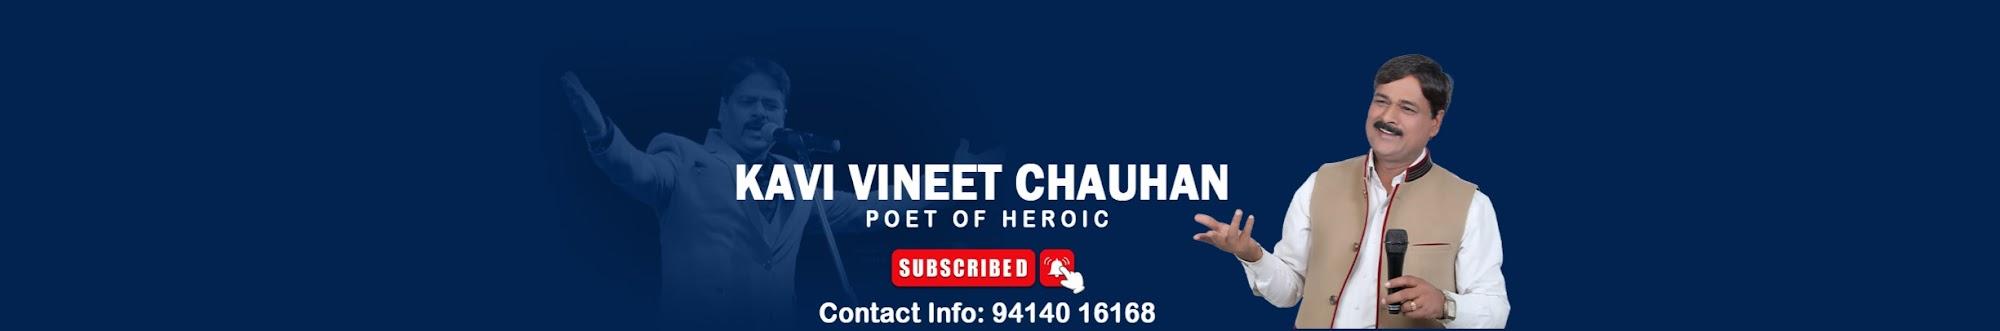 Kavi Vineet Chauhan